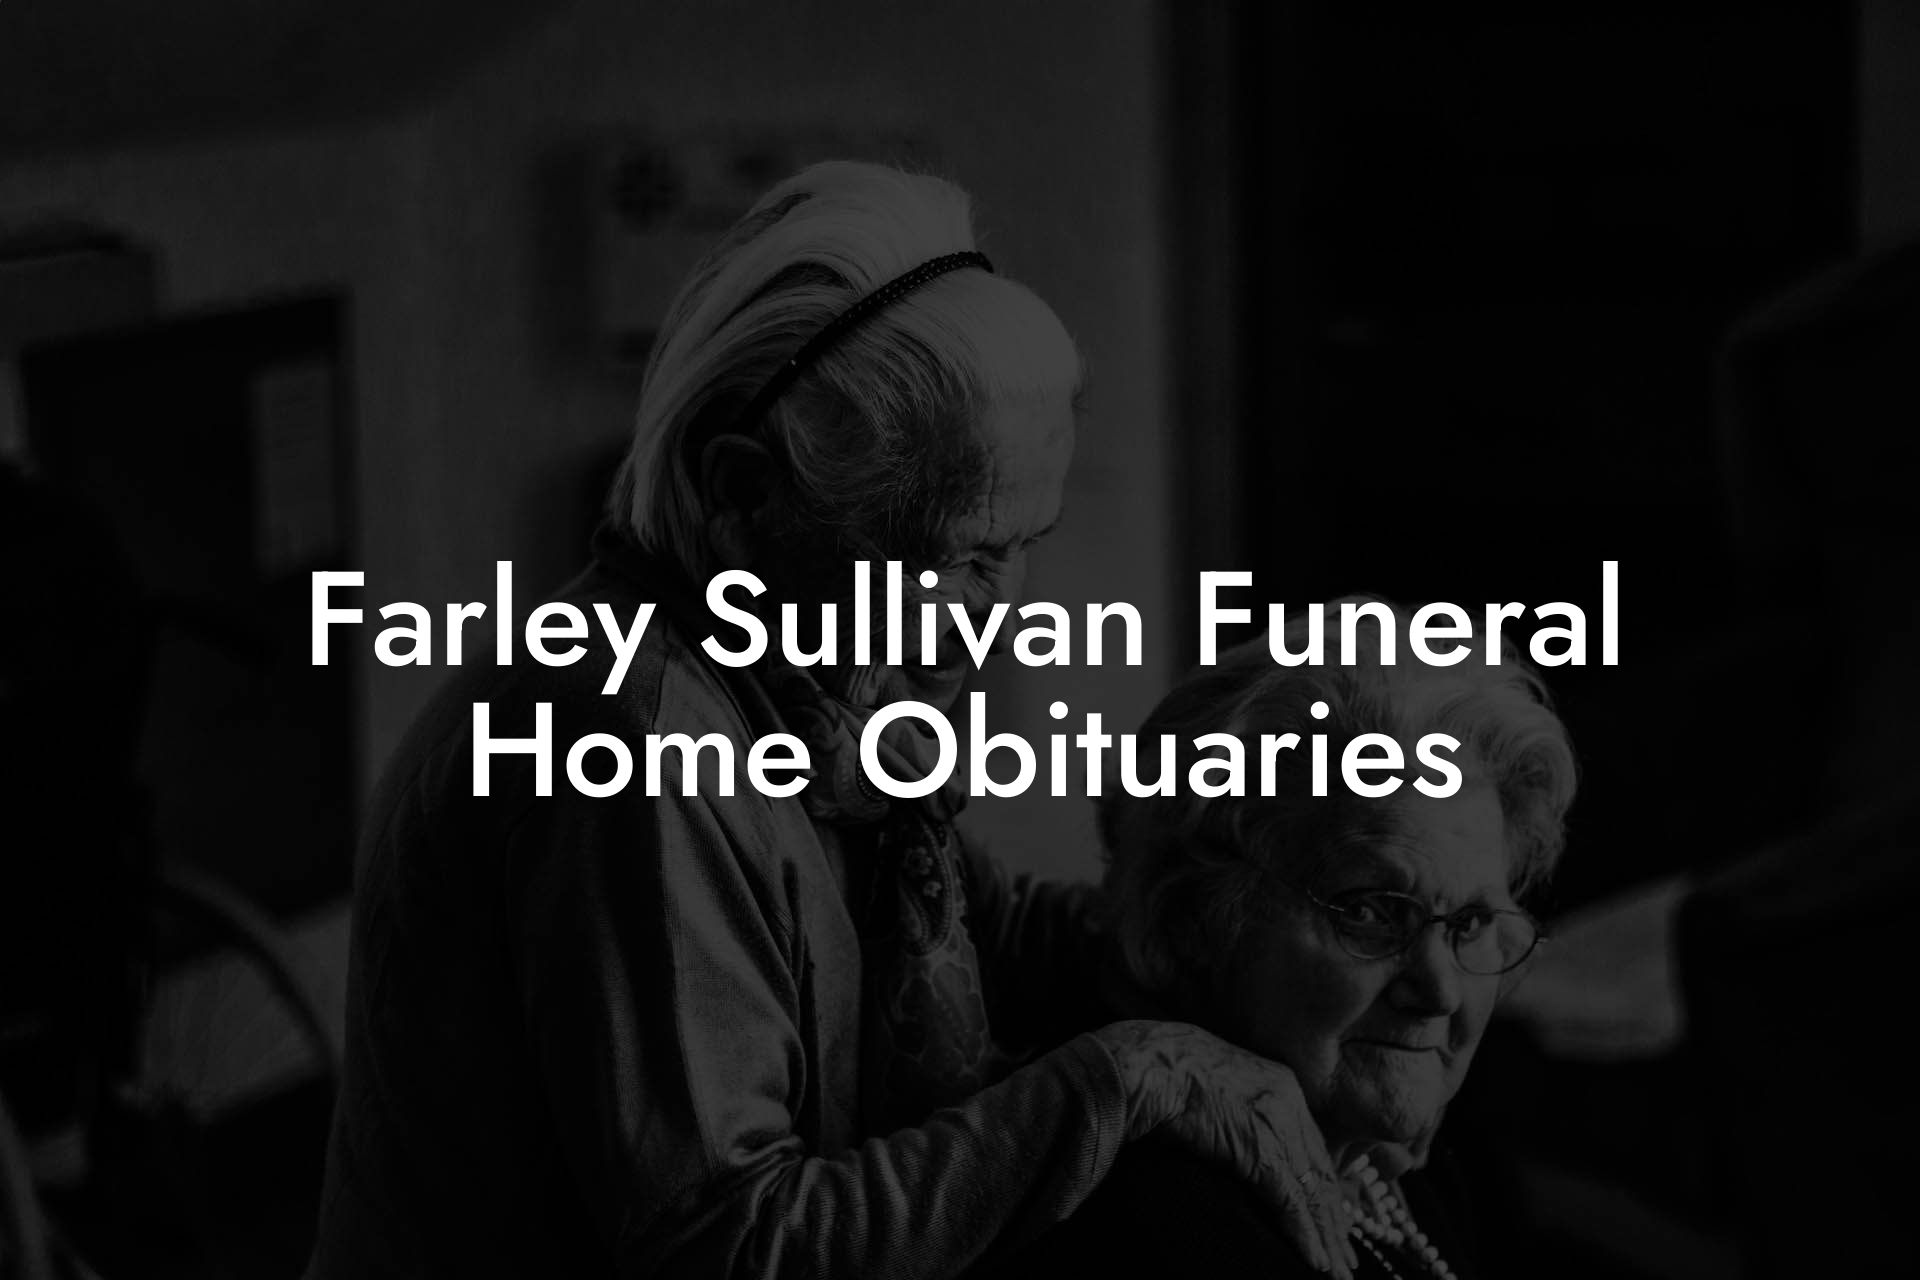 Farley Sullivan Funeral Home Obituaries